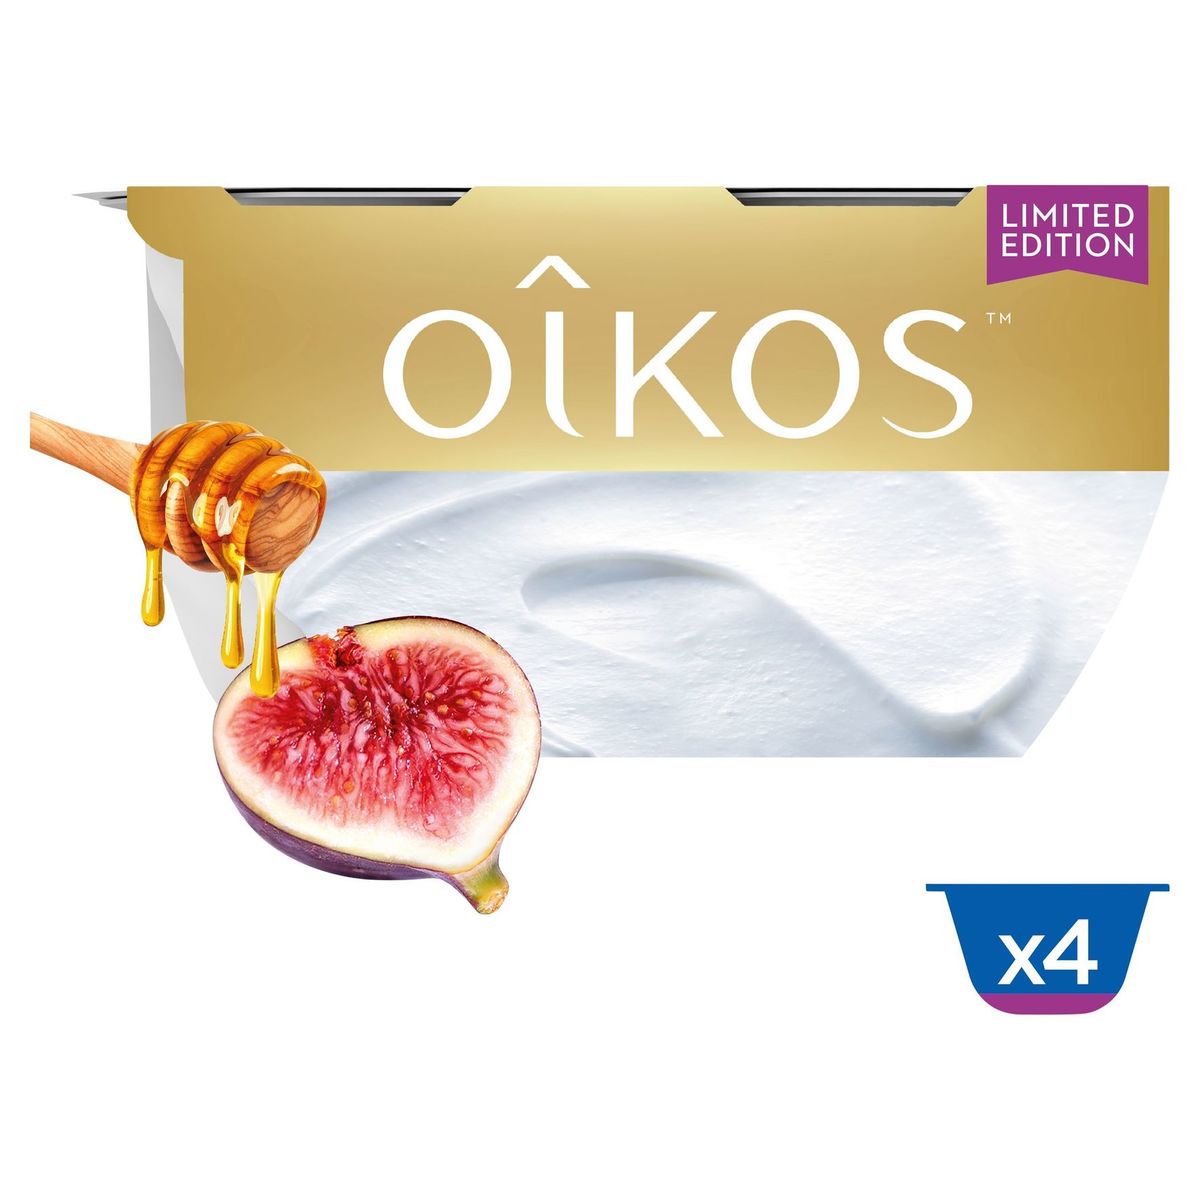 Oikos Yoghurt op Griekse Wijze Vijg Honing Limited Edition 4 x 115 g